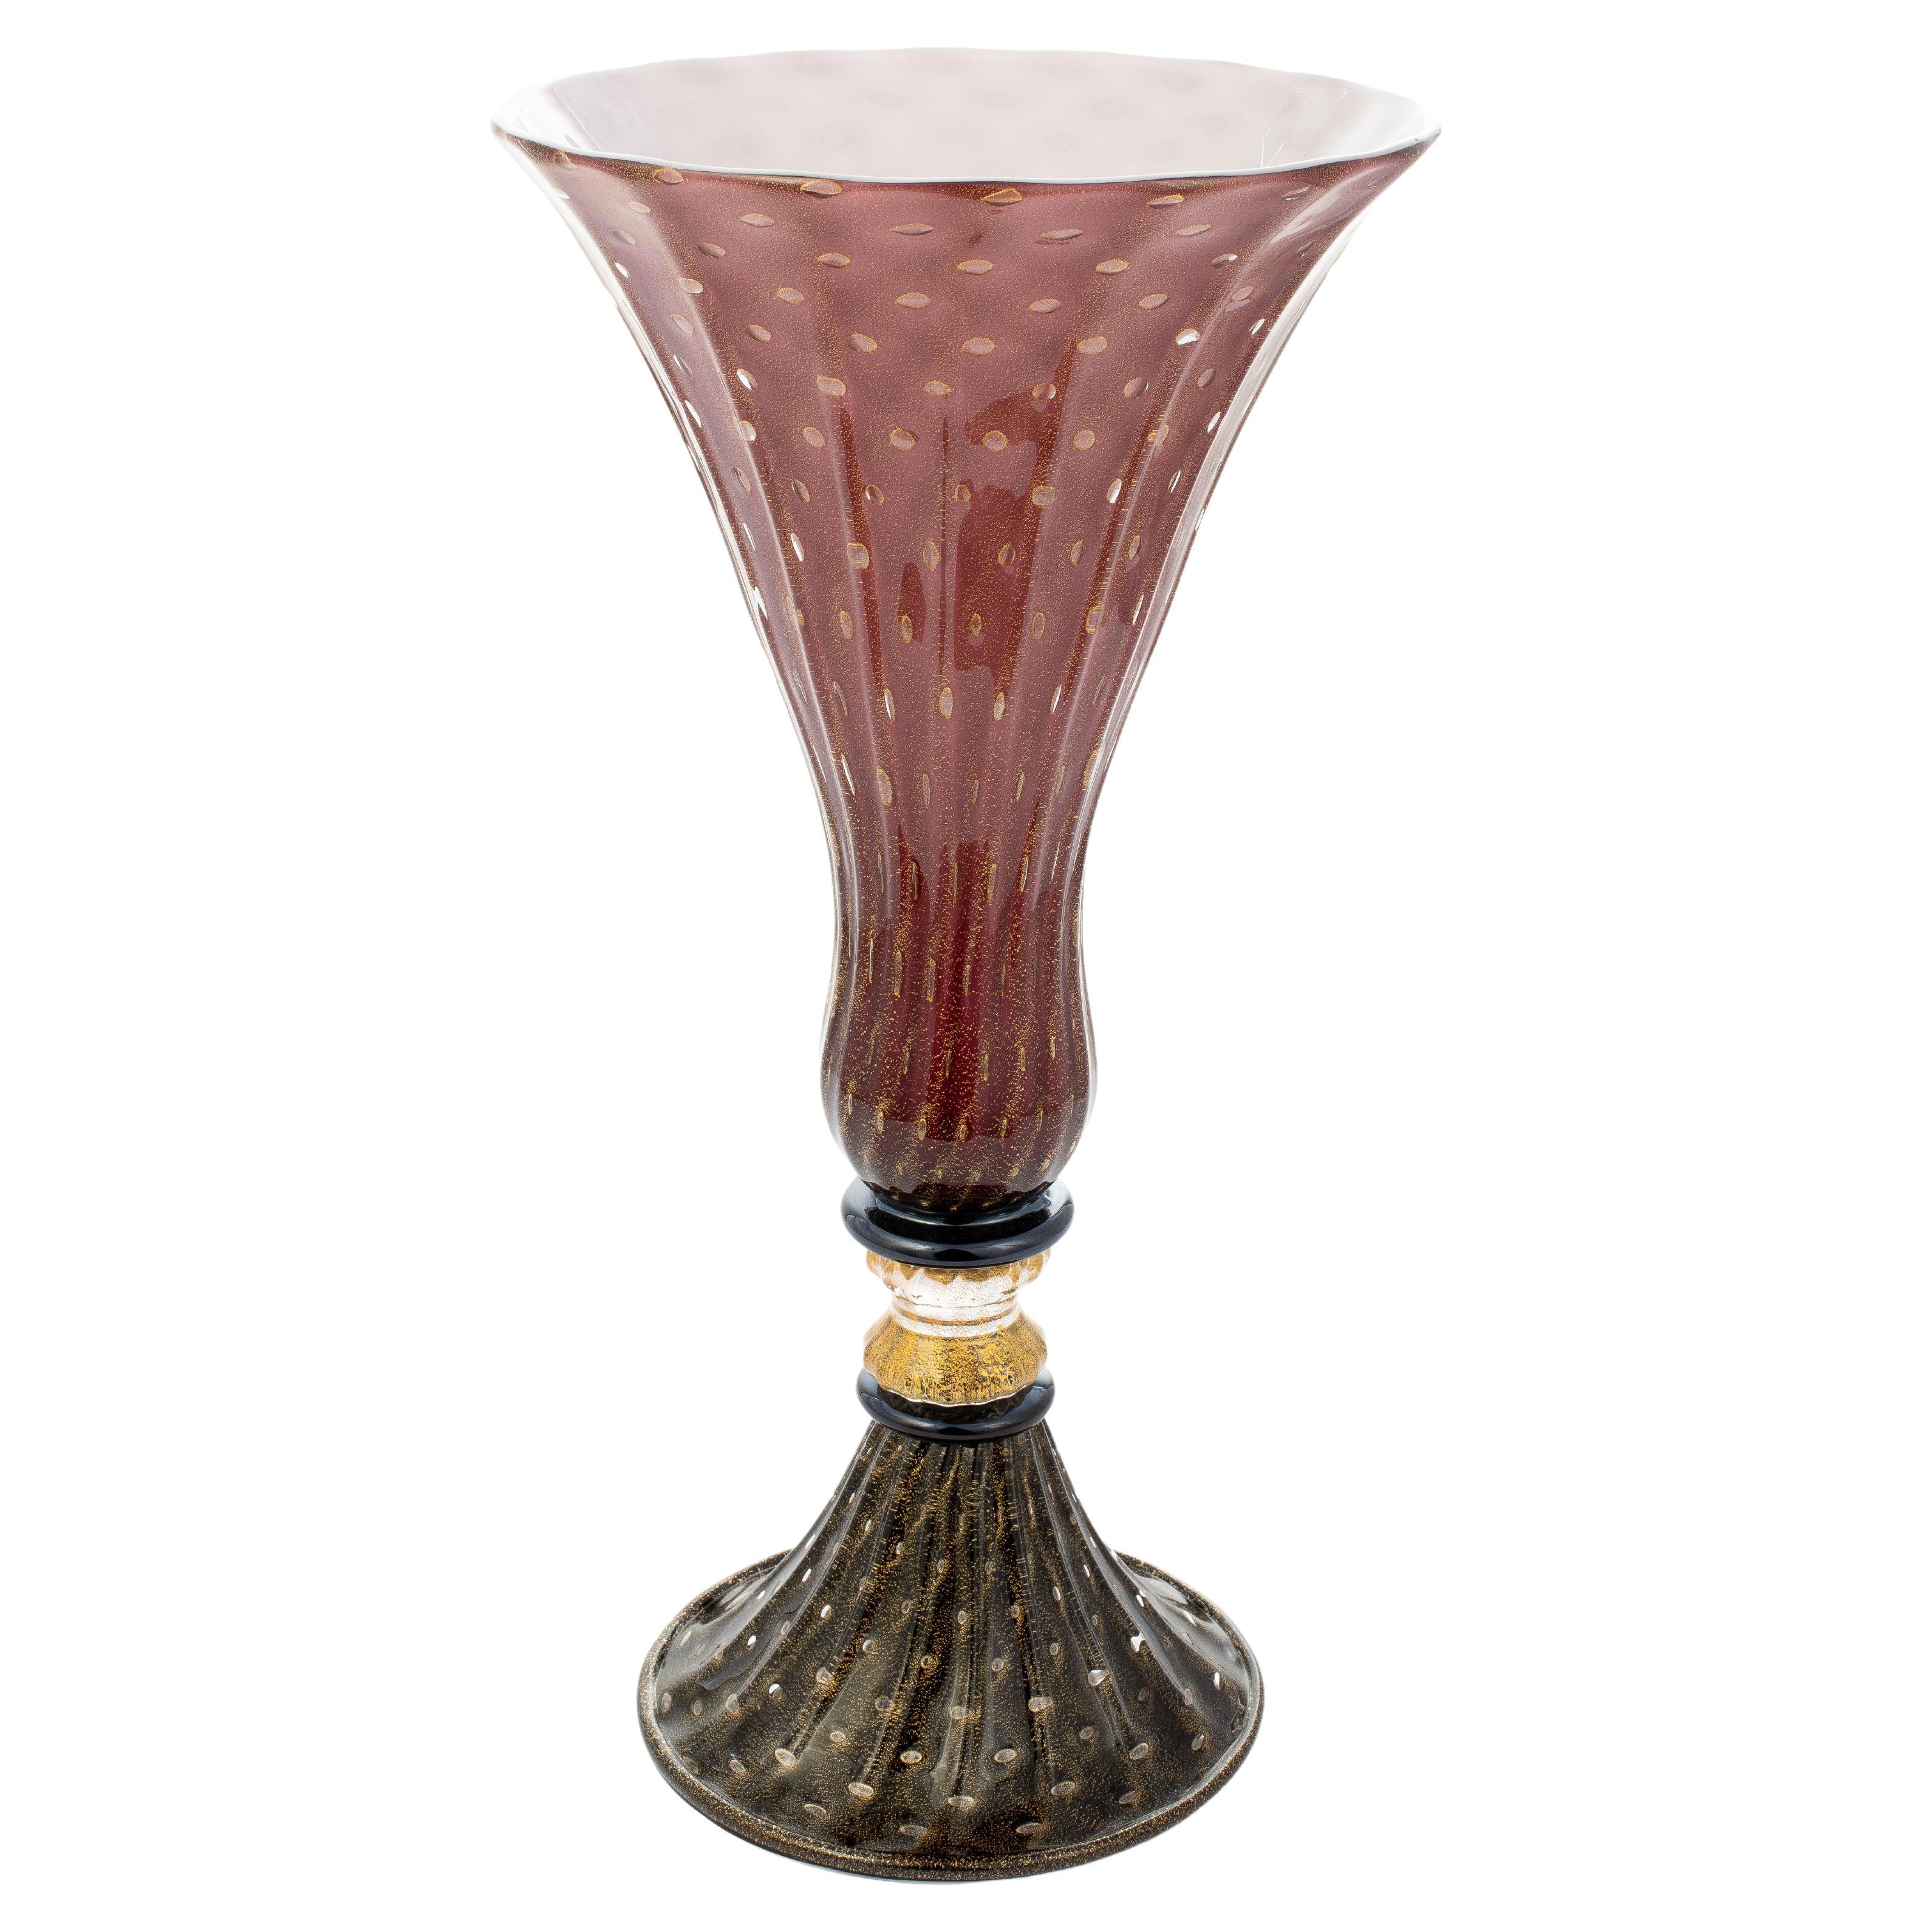 Vase en verre d'art de Murano « Napoleone à Venezia » fabriqué à la main, 1295, Ltd